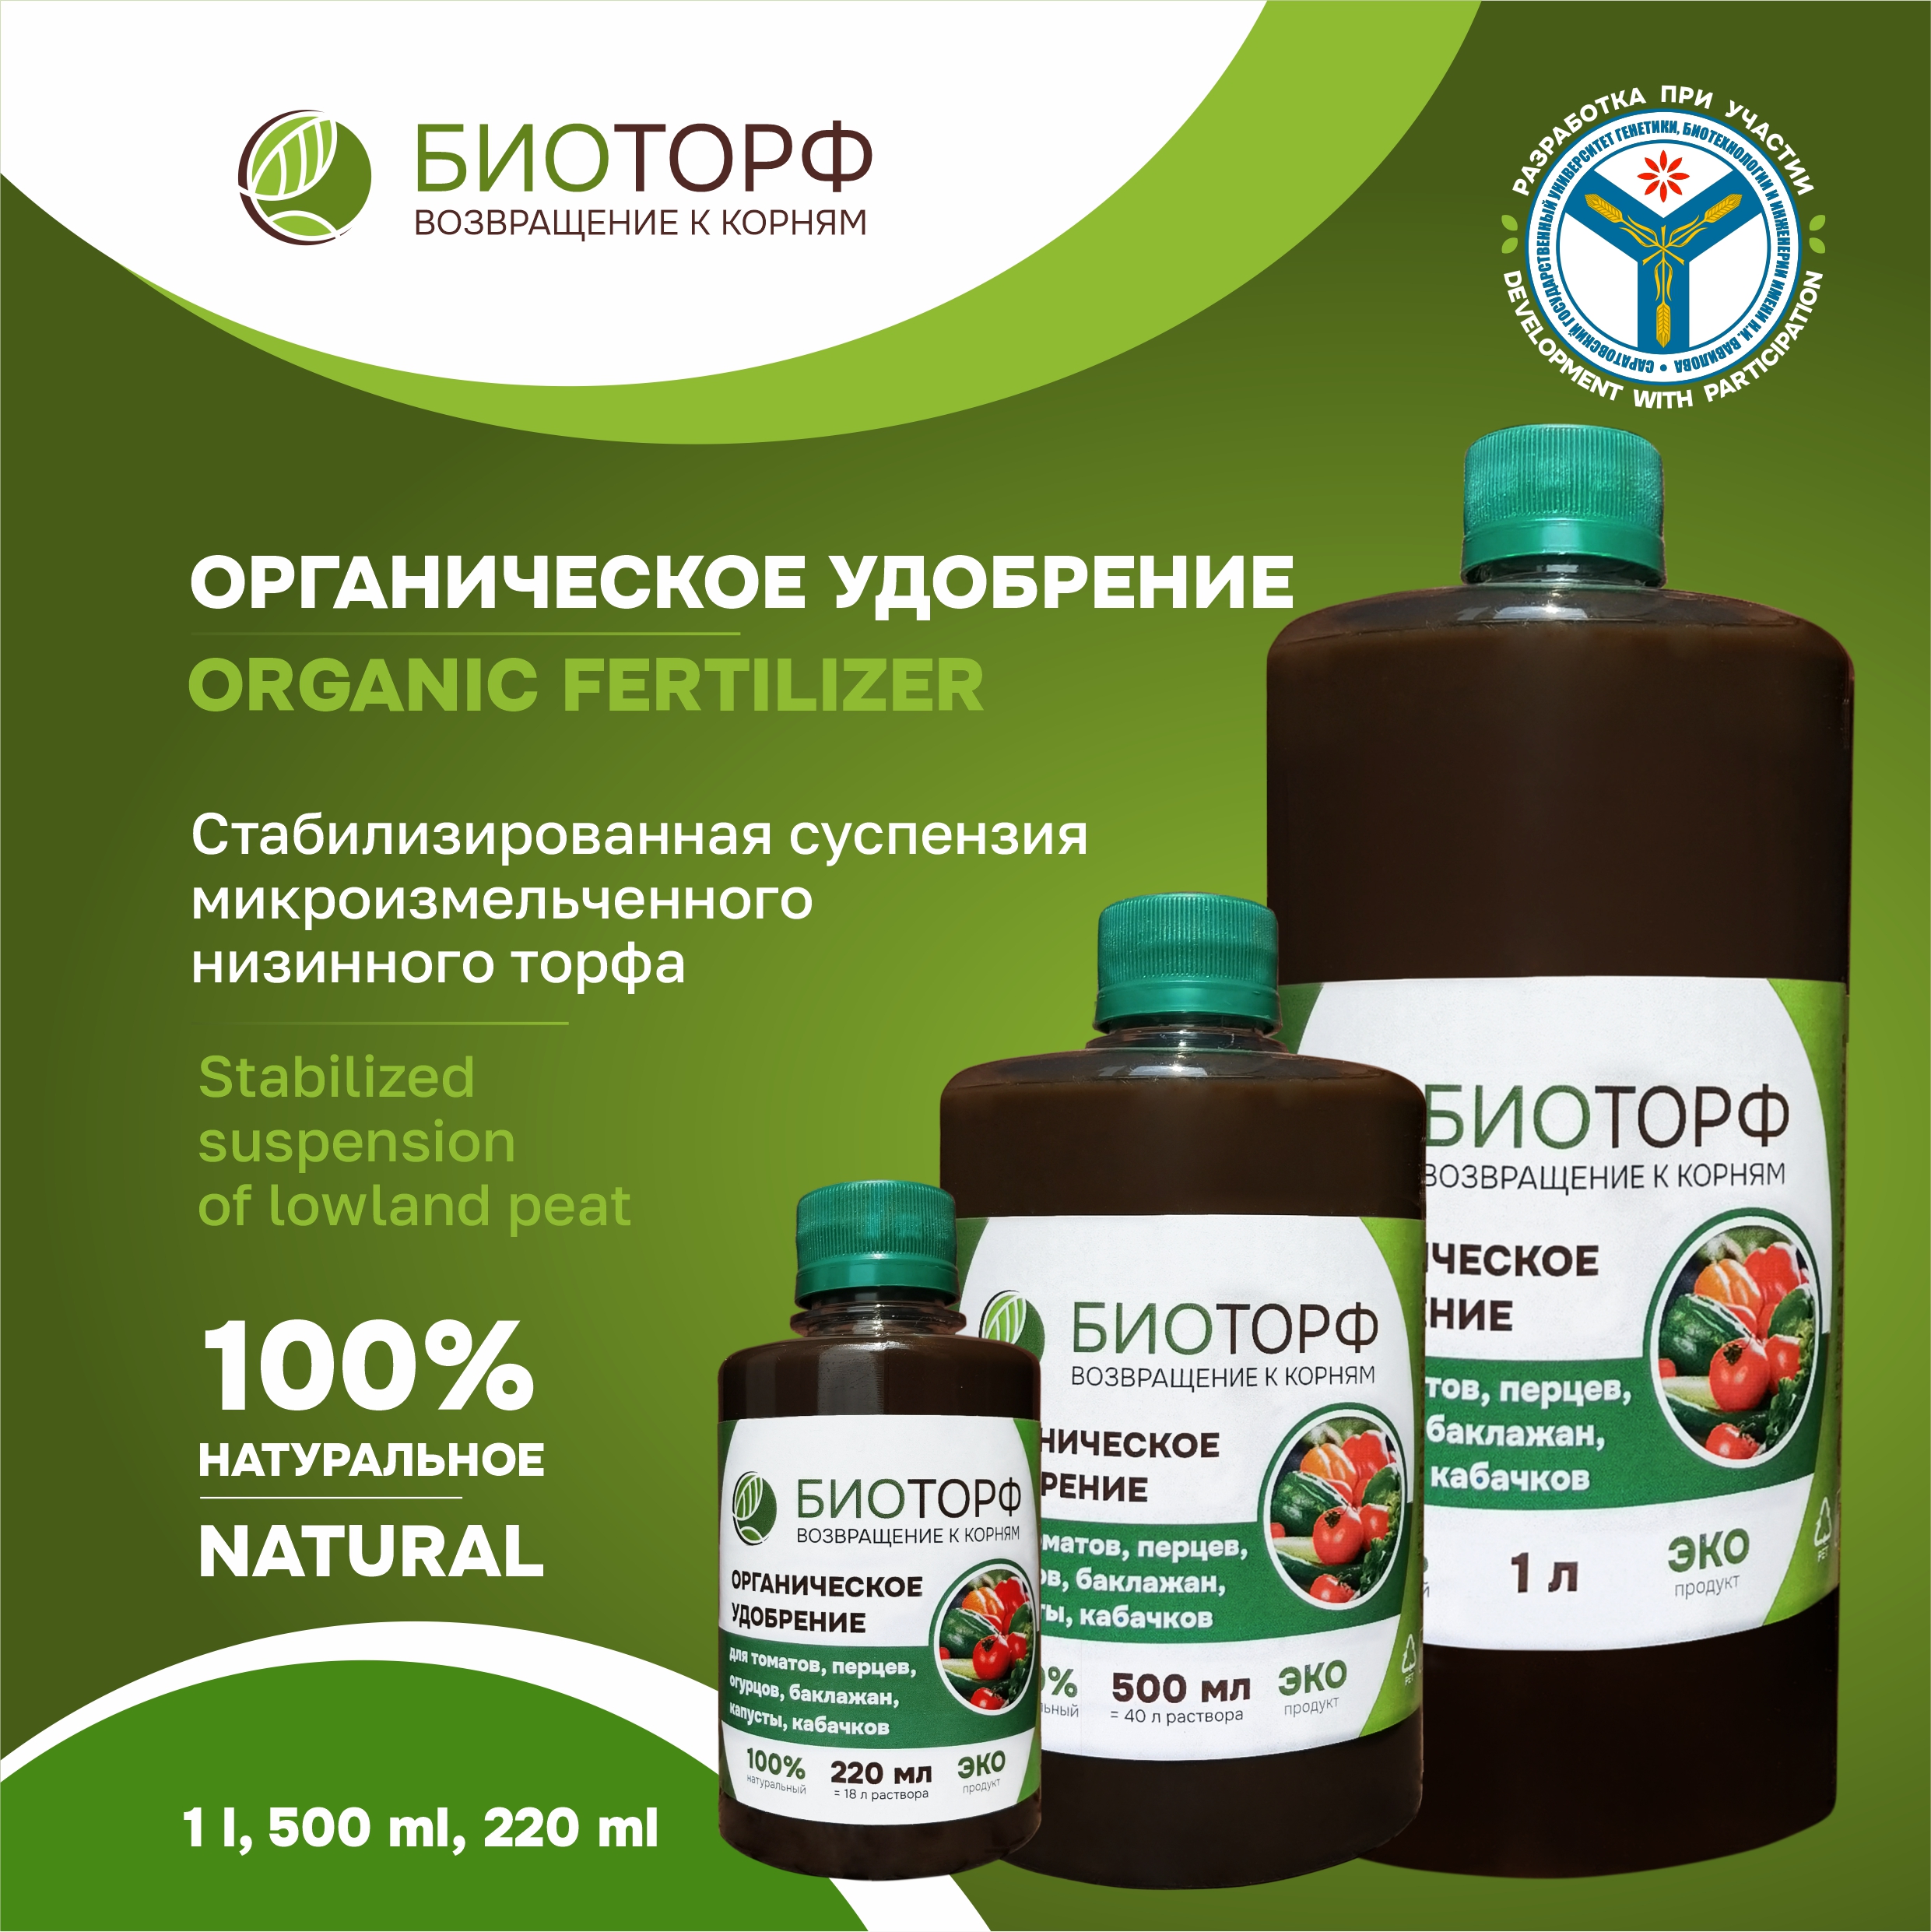 Biotorf, organic liquid fertilizer for tomatoes, peppers, cucumbers, eggplants, cabbage, zucchini, 220 ml, 500 ml, 1 l